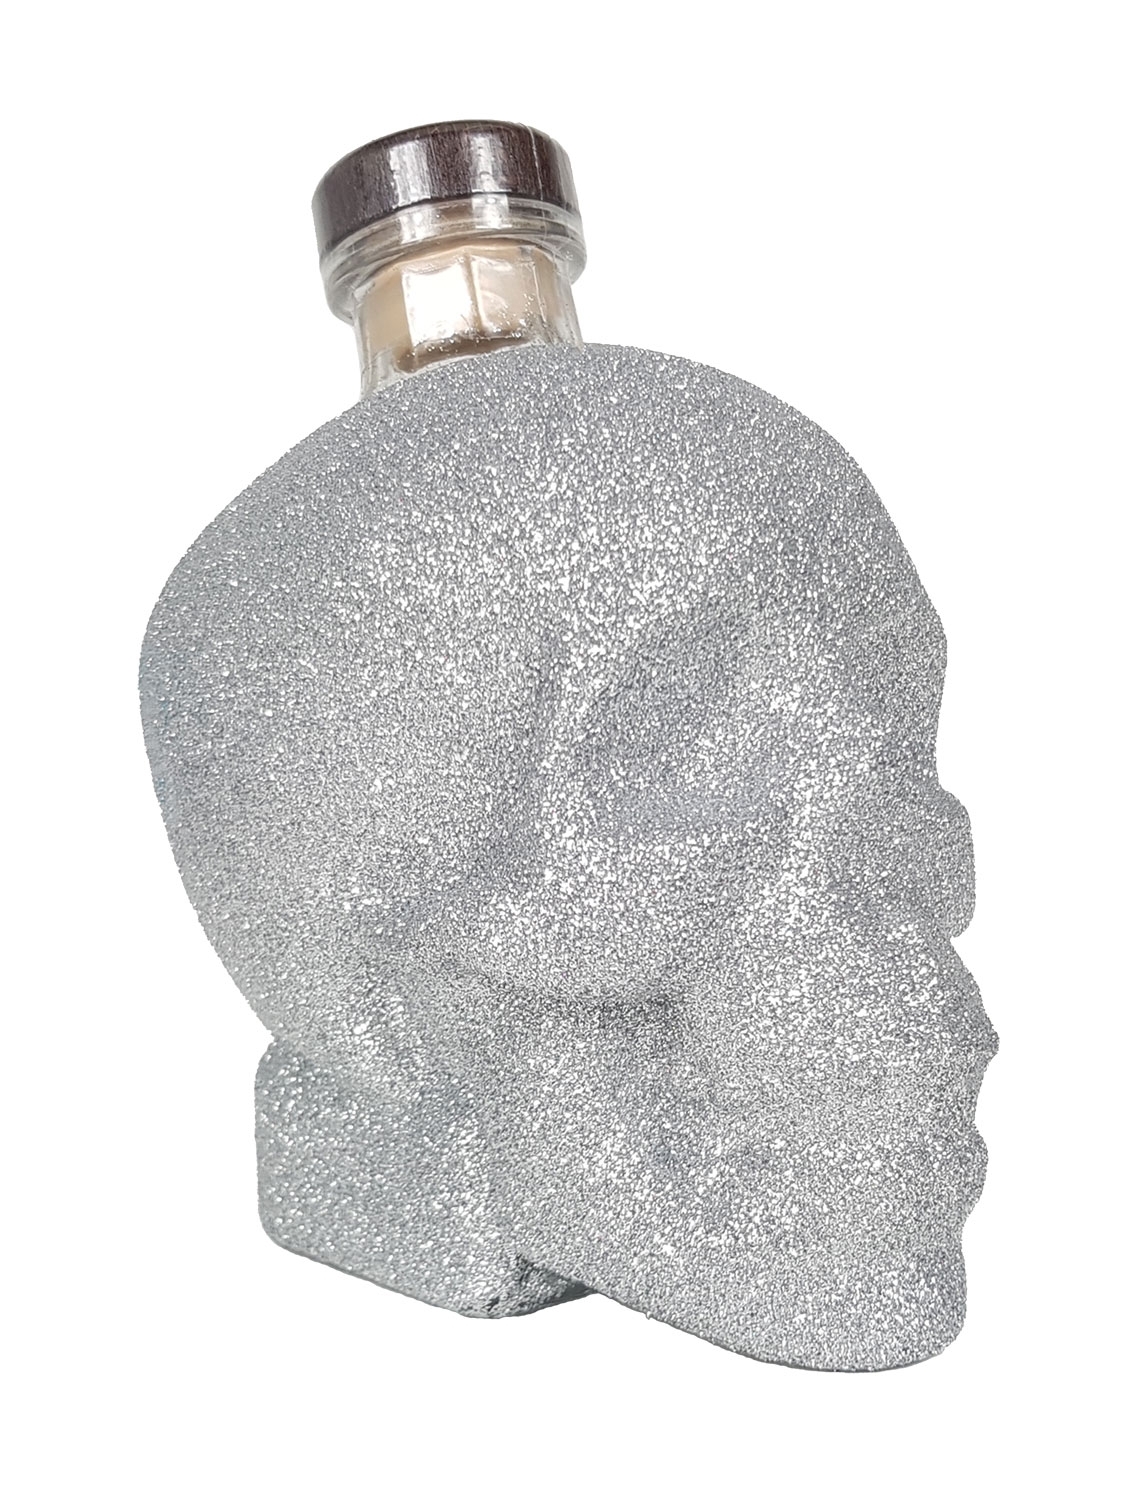 Crystal Head Vodka 0,7l 700ml (40% Vol) Bling Bling Glitzerflasche in silber -[Enthält Sulfite]